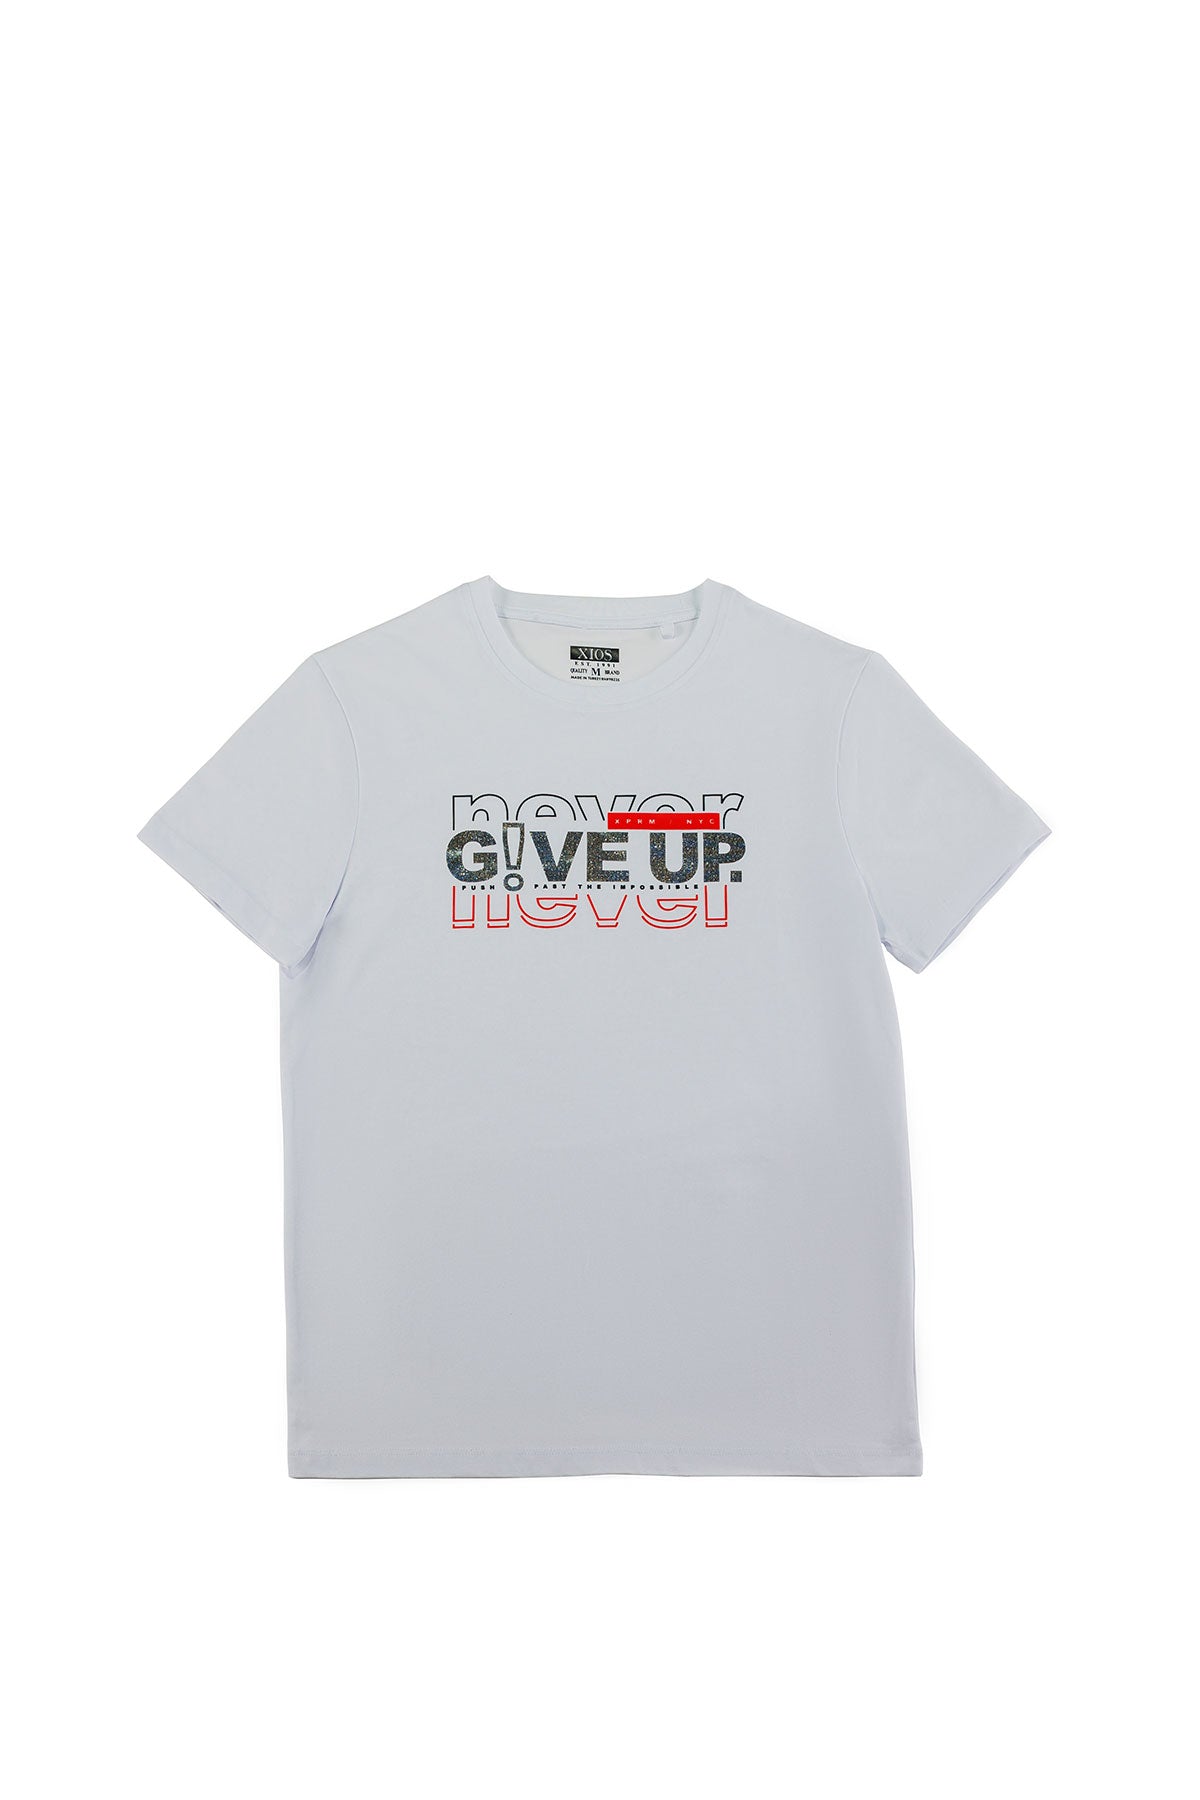 Camiseta con gráfico "Nunca te rindas"